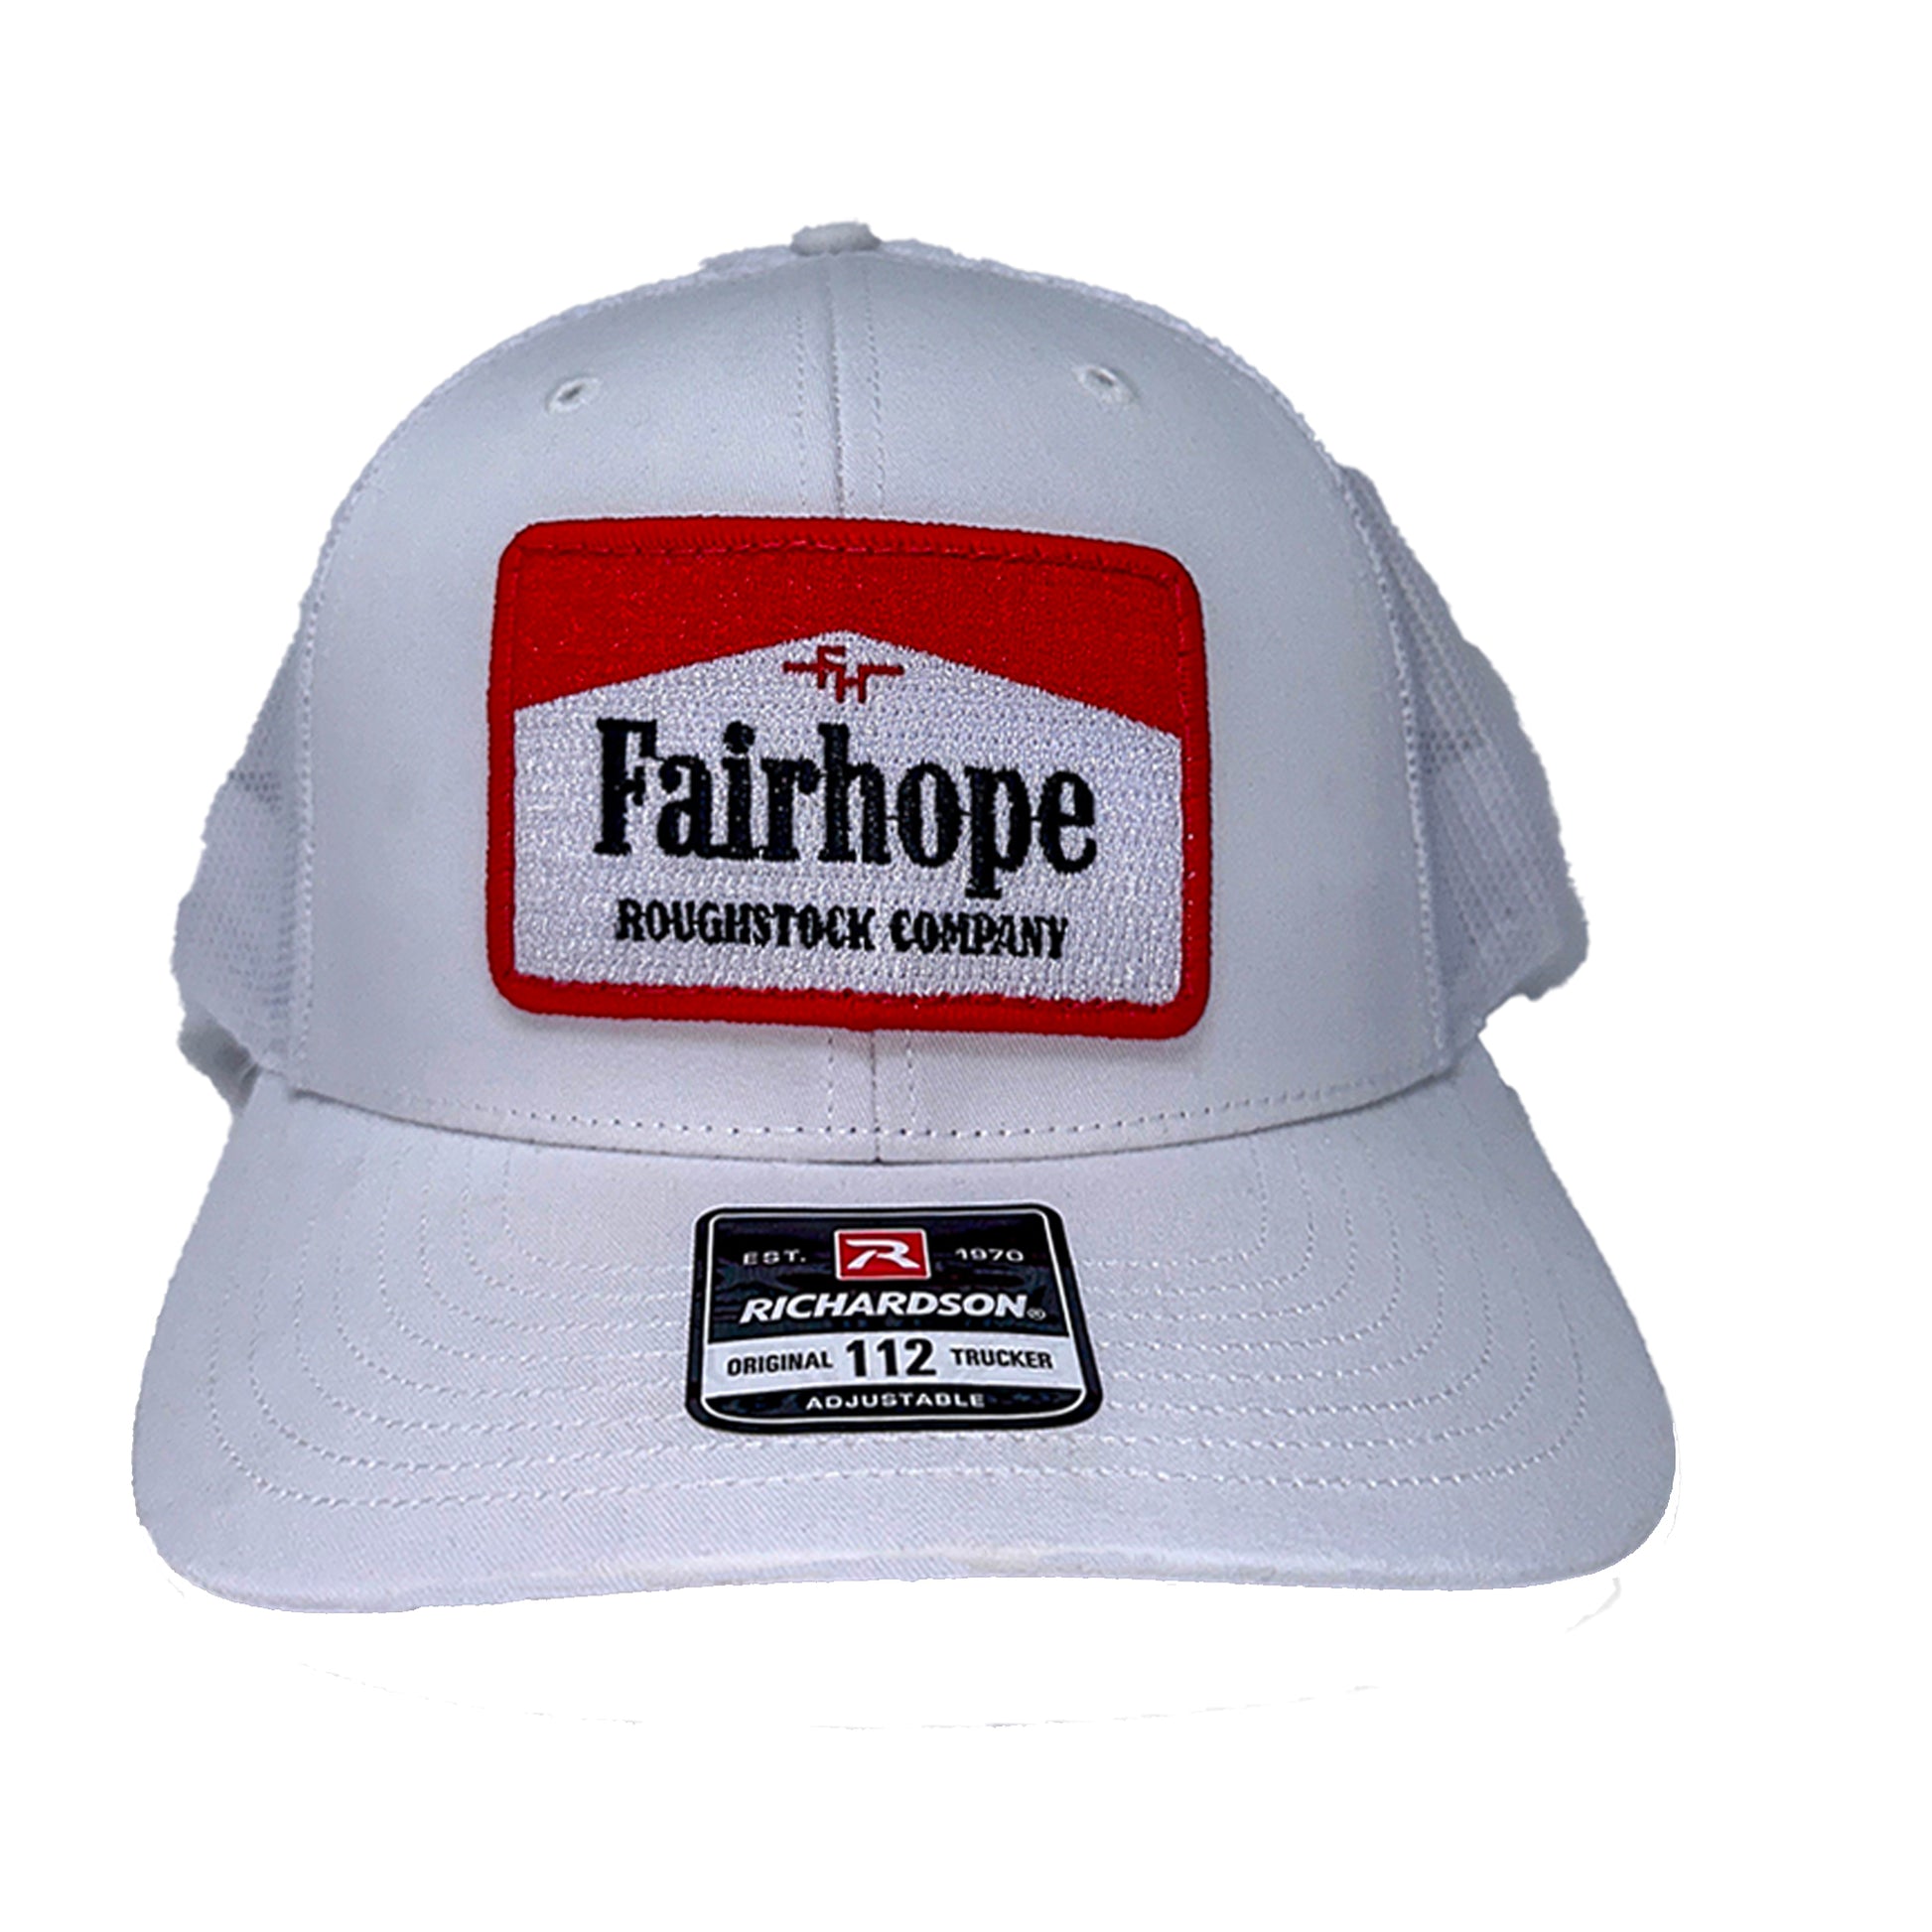 The “Cowboy Killer” Trucker Hat - White - Fairhope Roughstock Company